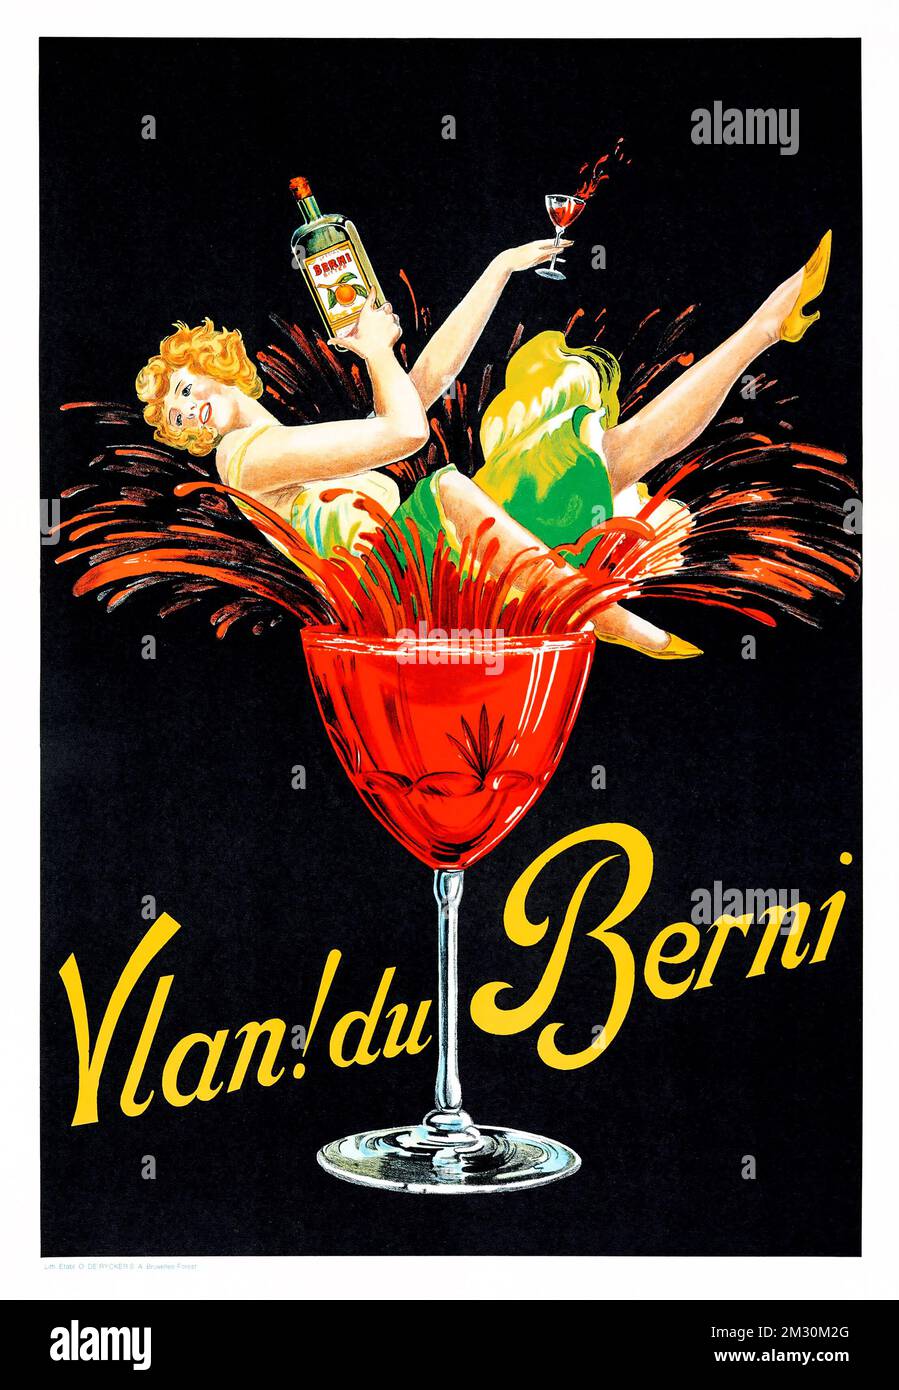 Alcohol advertisement poster - Vlan du Berni Bitter (c 1920s). Belgian Advertising Poster Stock Photo